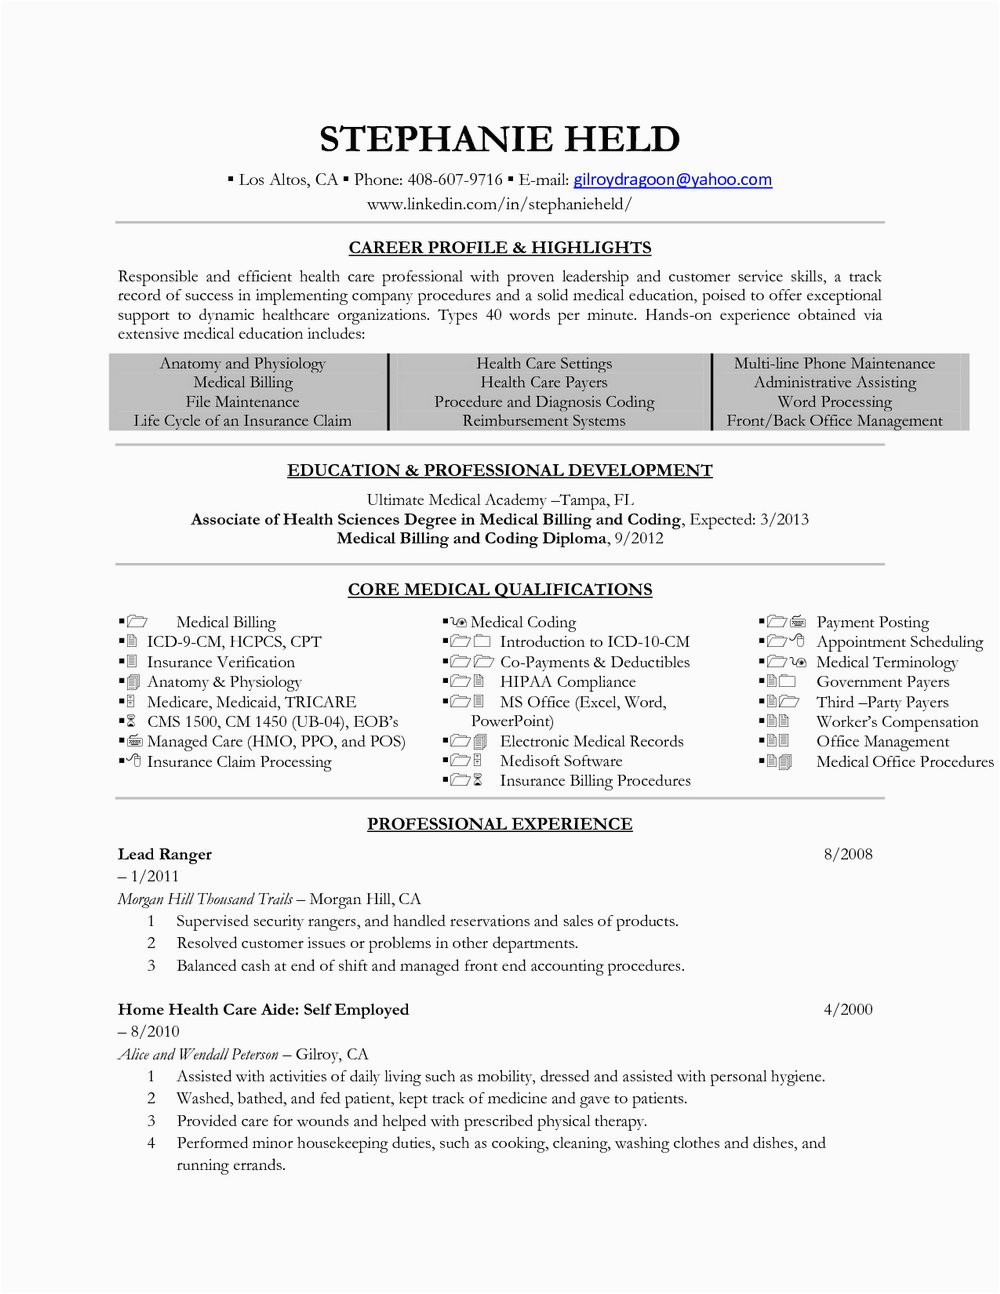 Sample Objectives for Medical Billing and Coding Resume Resume for Medical Billing and Coding Specialist